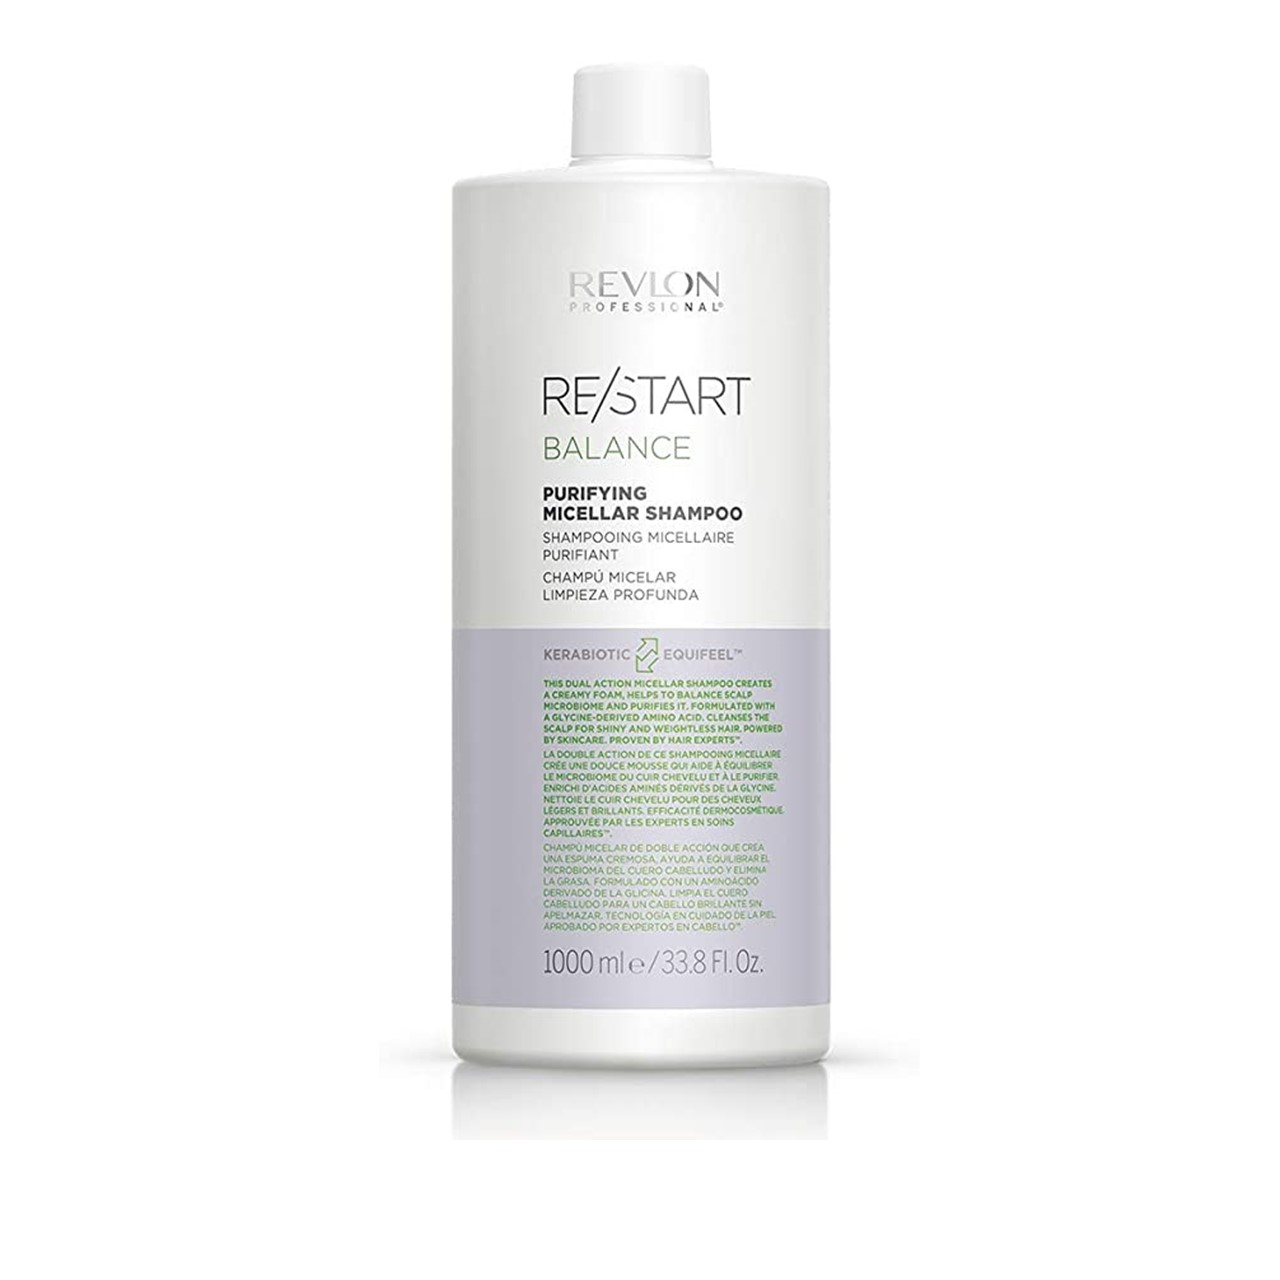 Revlon Professional Re/Start Balance Purifying Micellar Shampoo 1L